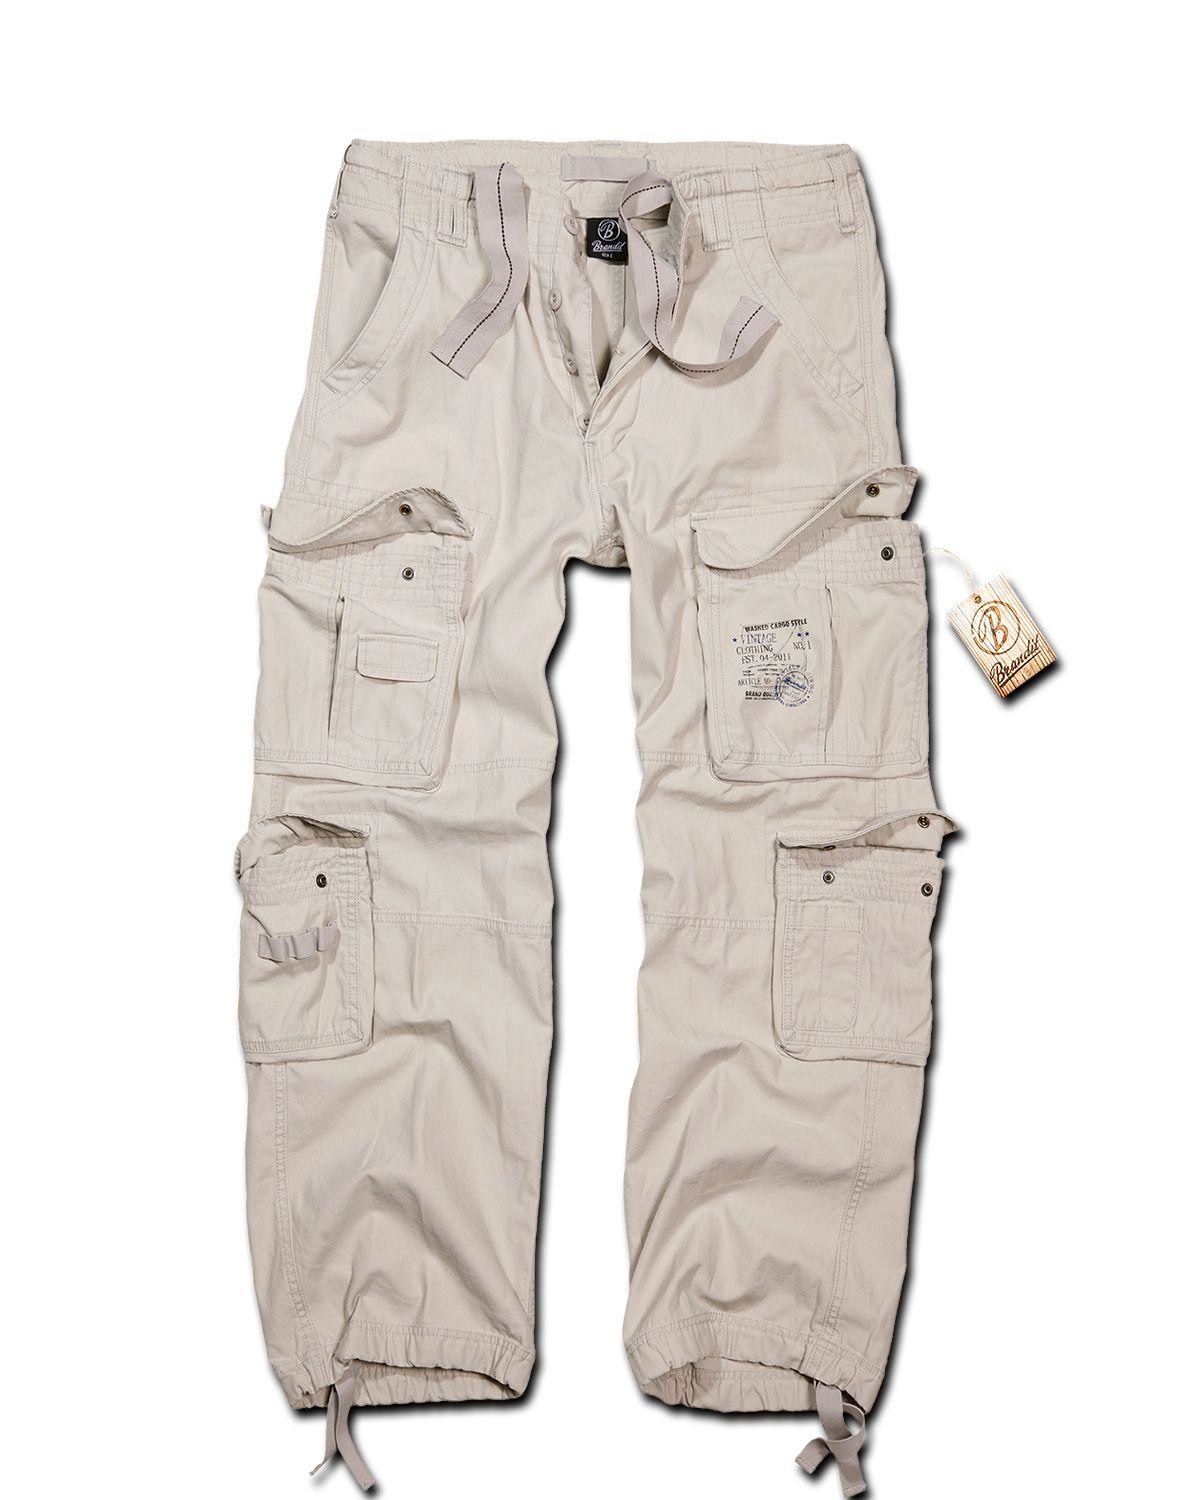 Брюки Brandit Pure Vintage Trouser. Brandit / брюки m-65 Vintage trousers. Штаны карго Pure Vintage (Brandit). Штаны Cargo Brandit.